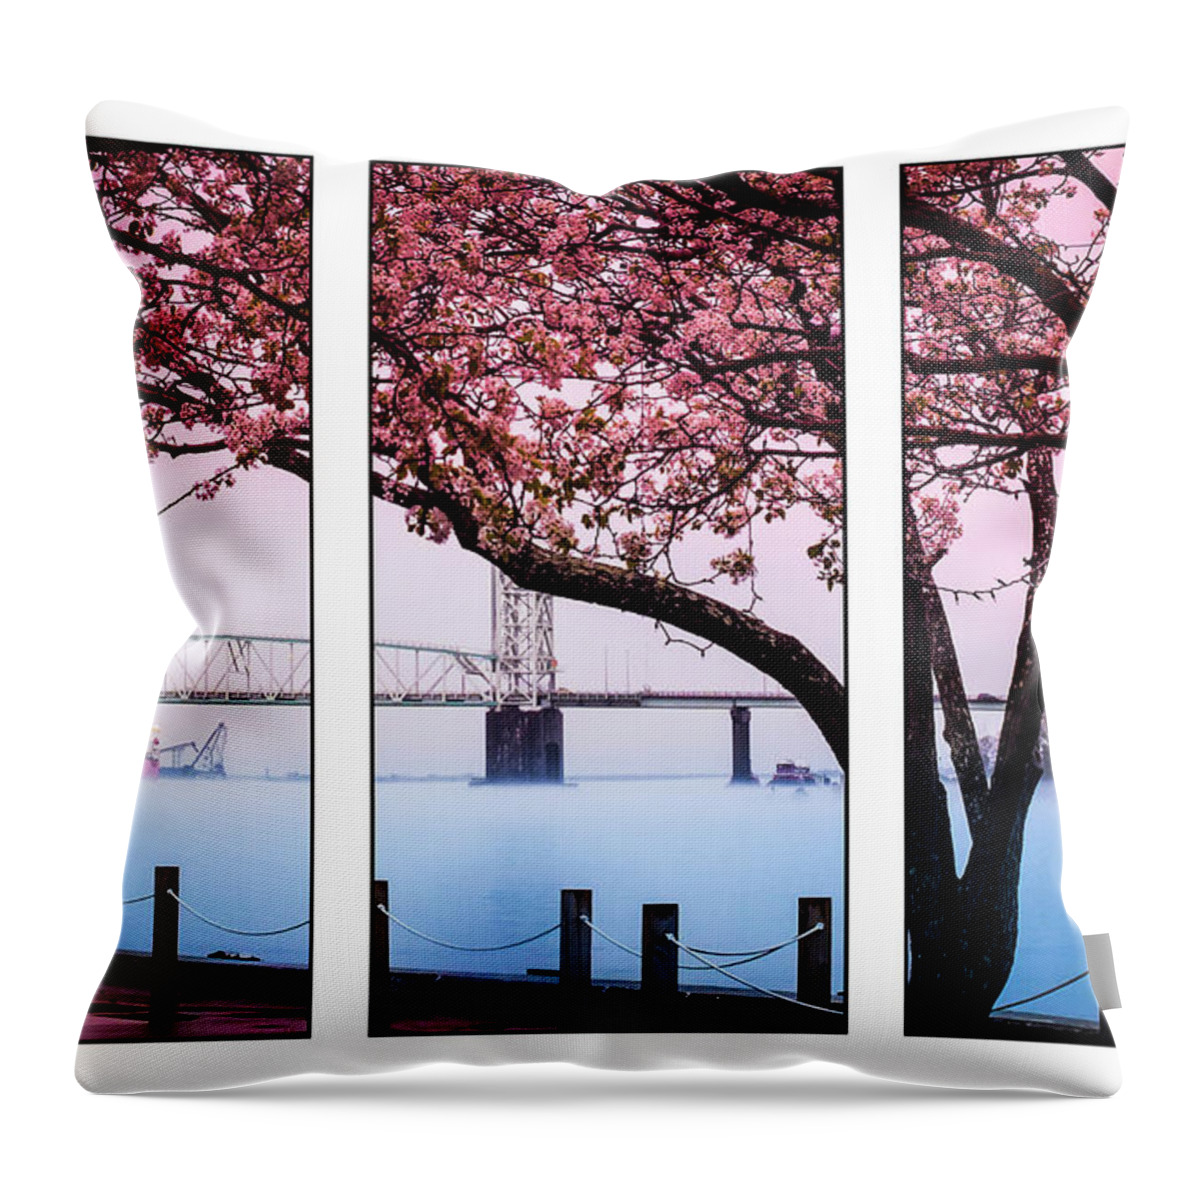 Cape Fear River Bridge Throw Pillow featuring the photograph Cape Fear River Bridge Triptych by Karen Wiles